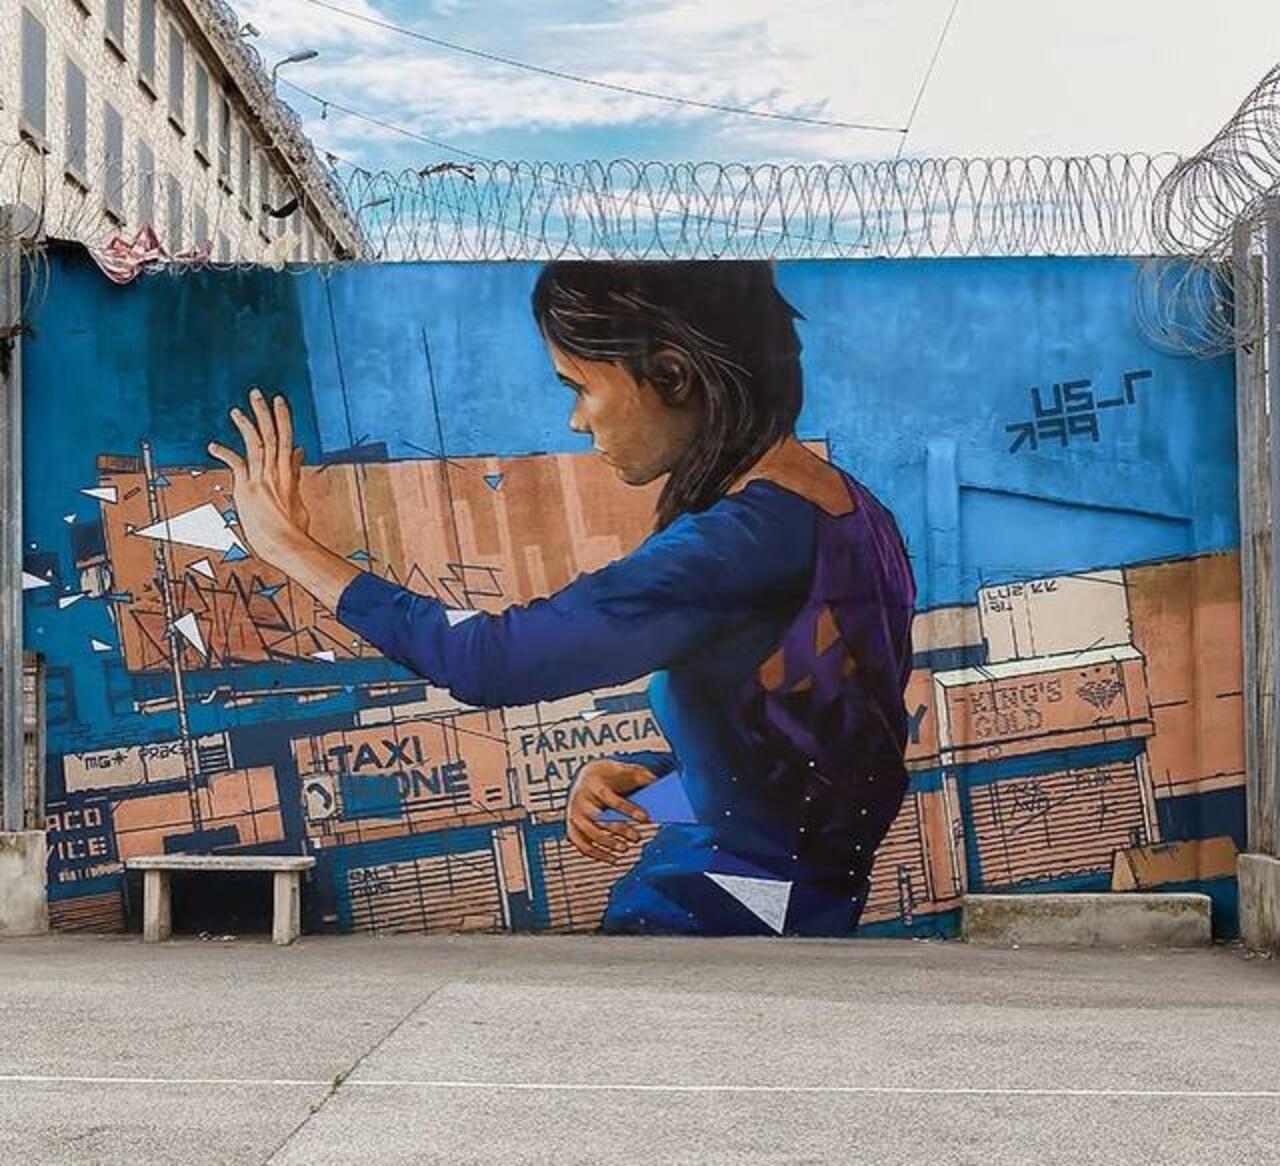 STREET ART - David Mesguich new mural at the Baumettes Prison of Marseille, France 

#art #arte #graffiti #streetart http://t.co/mCy6TzIjjA